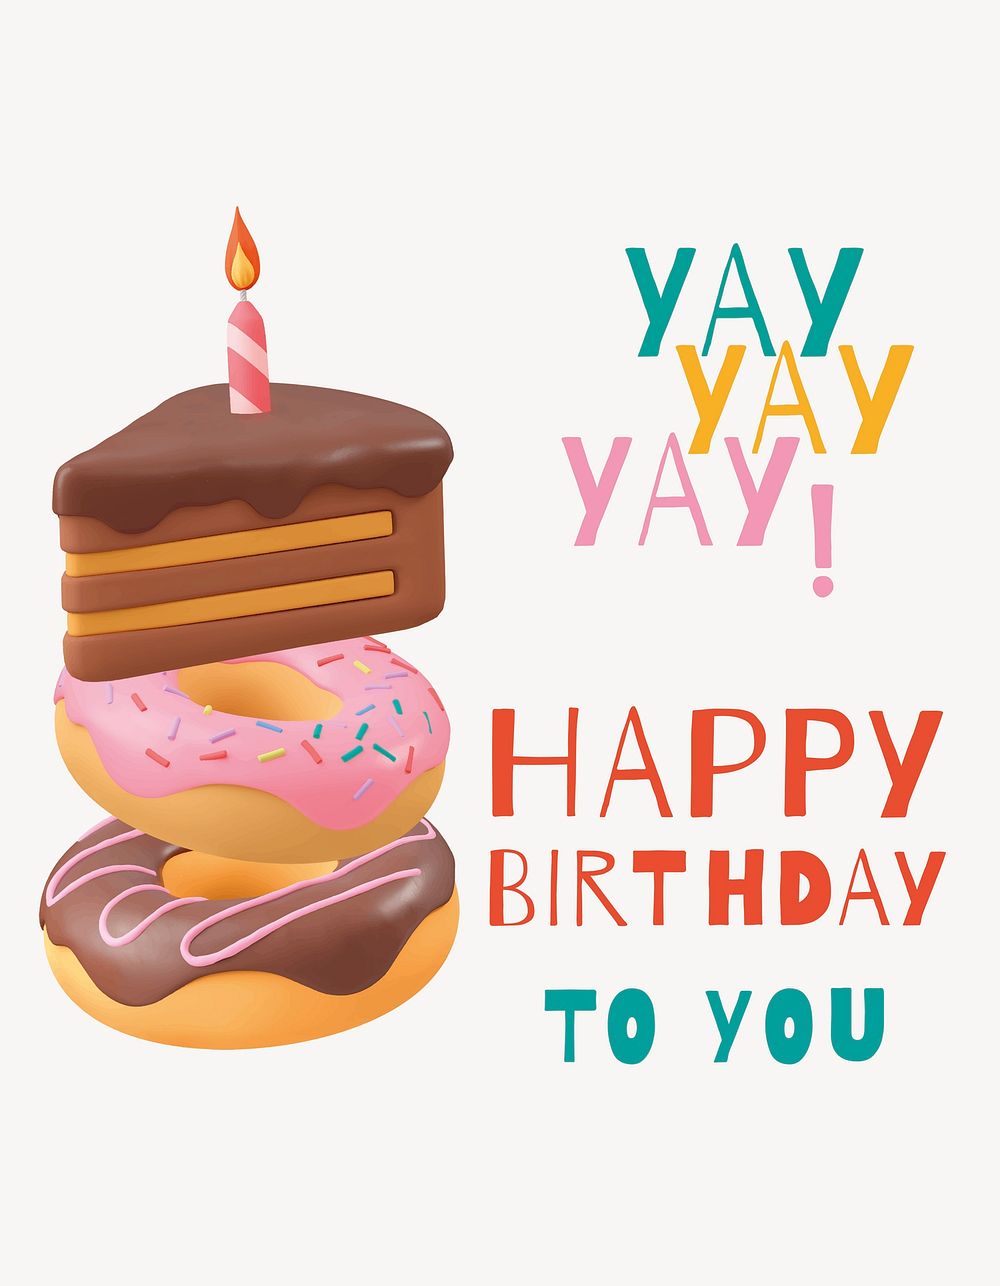 Birthday cake flyer template, cute greeting card psd